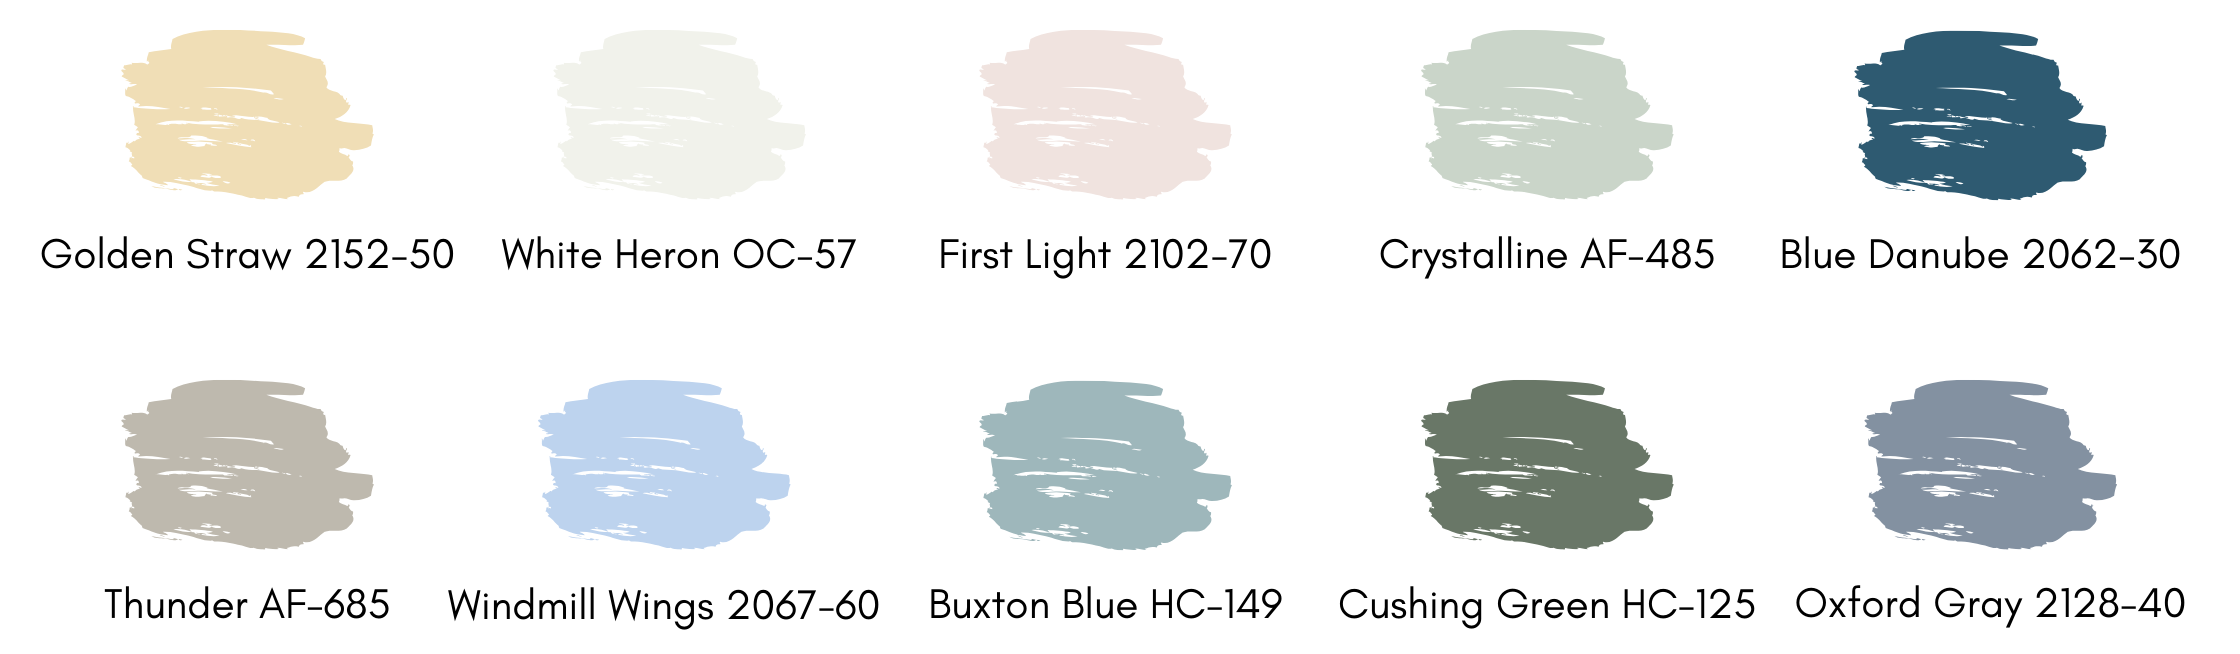 Benjamin Moore Color Trends 2020 Palette